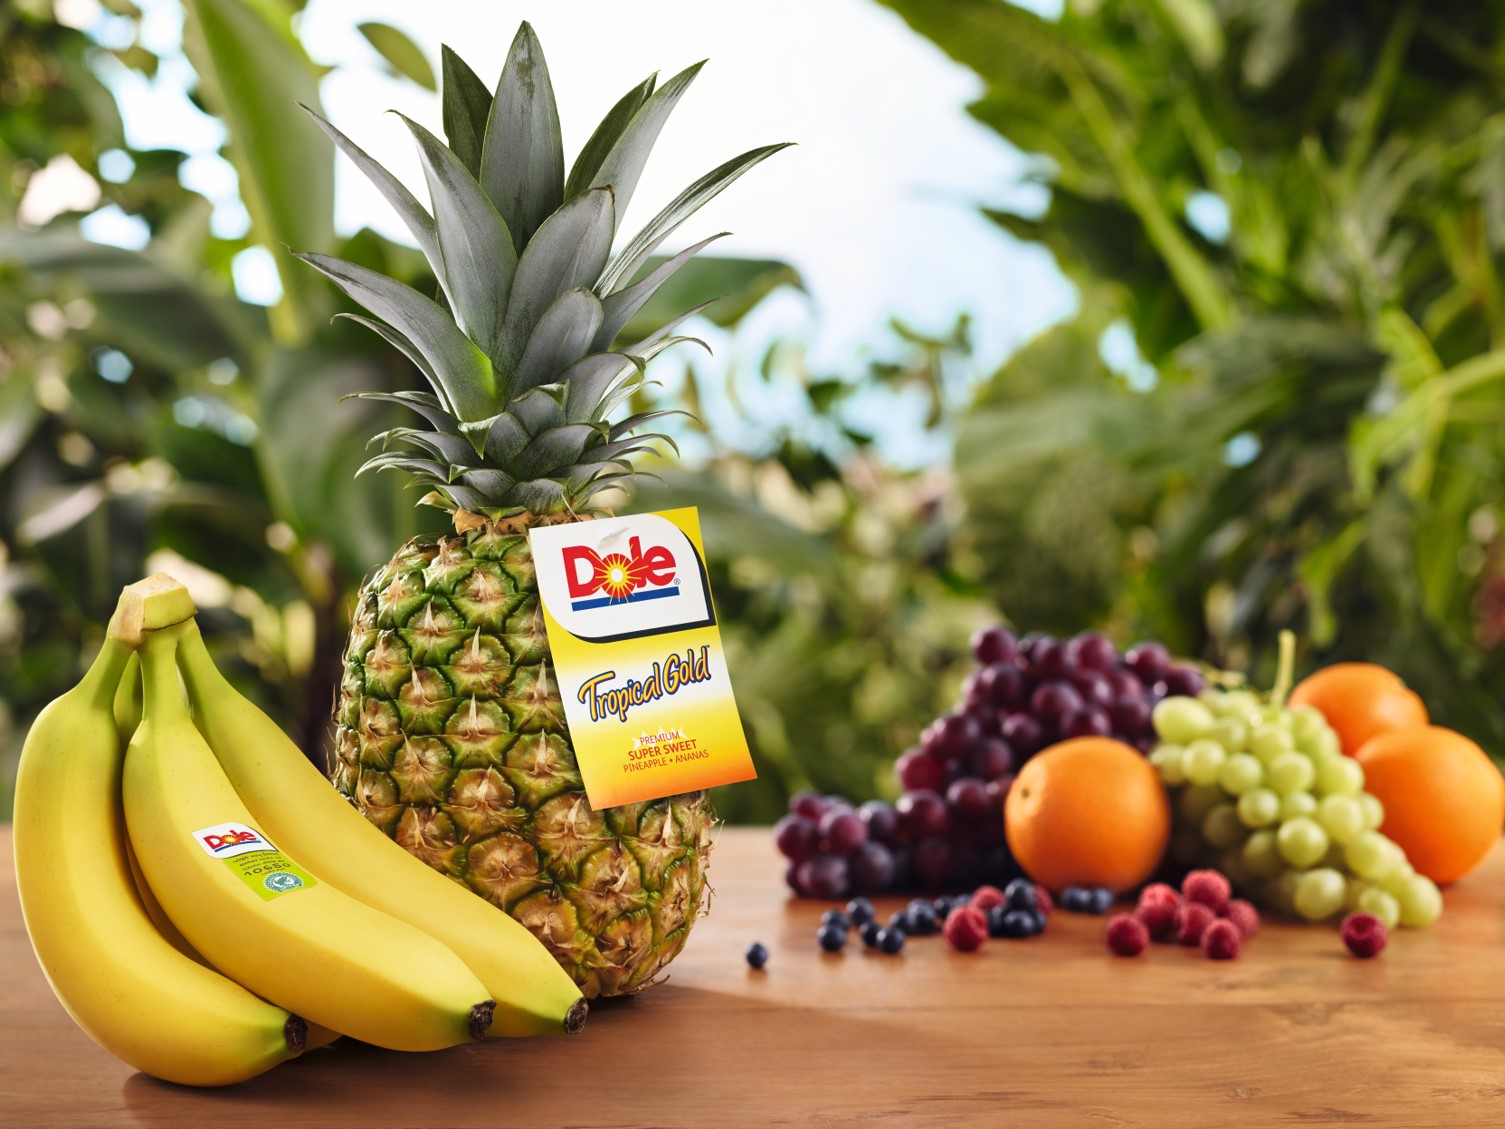 Dole Tropical Products Latin America Ltd